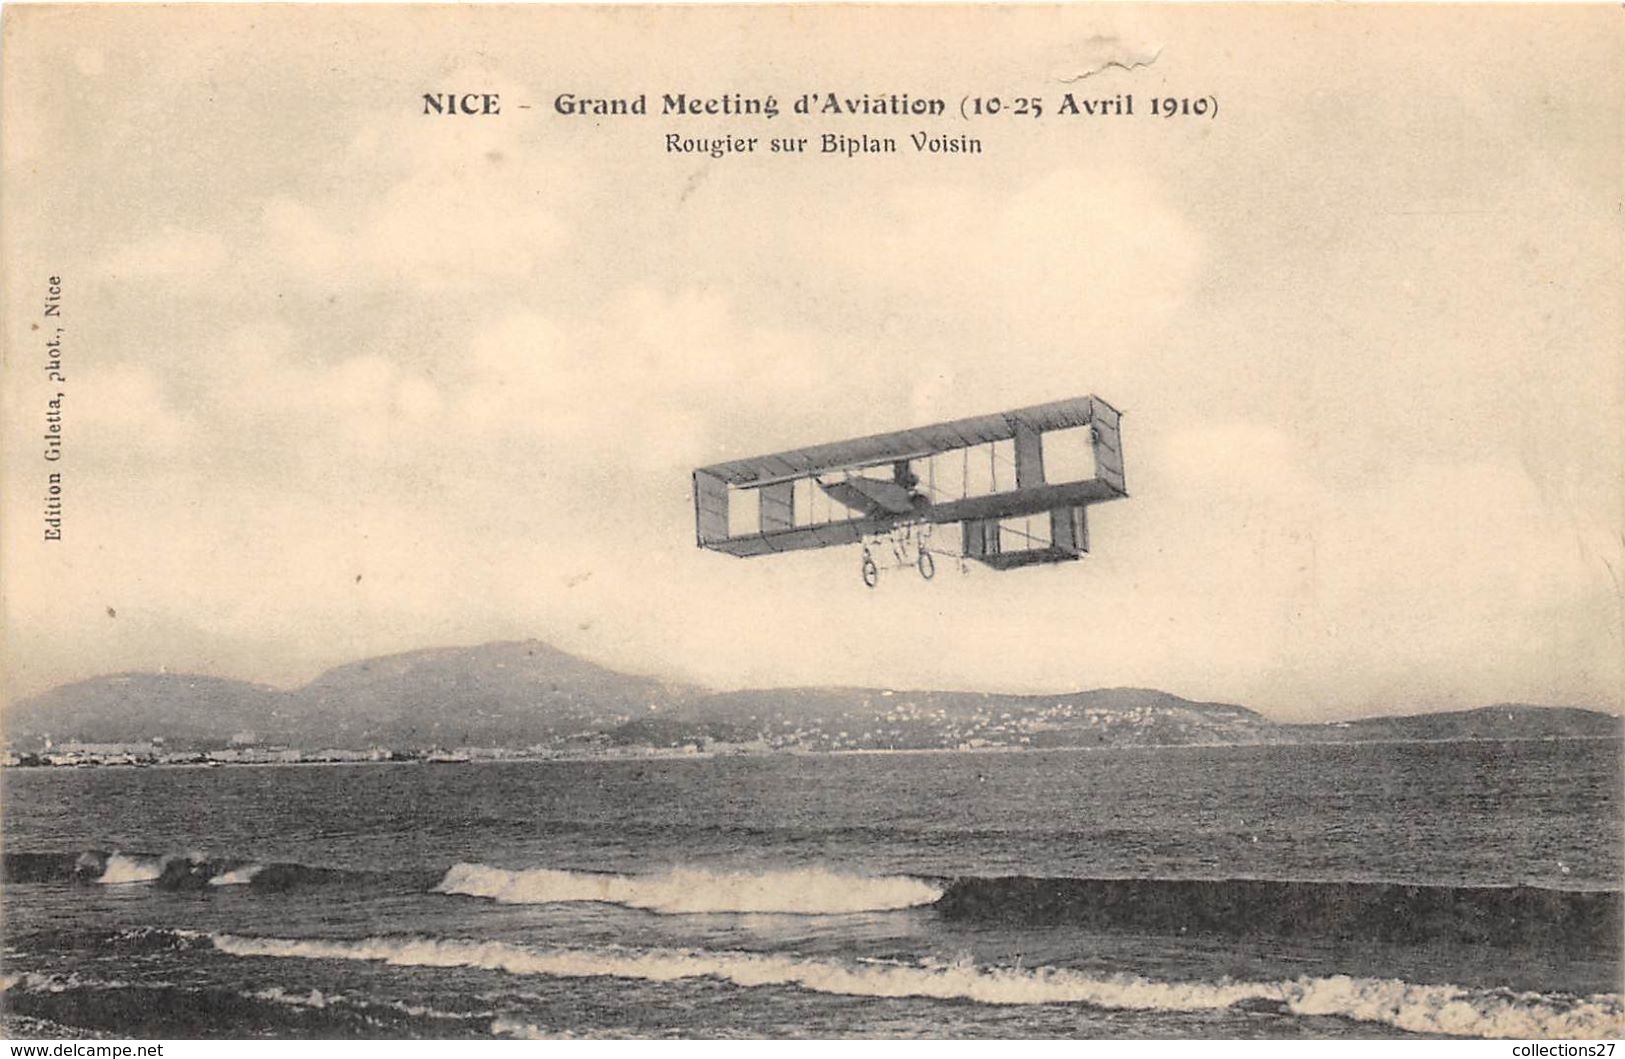 06-NICE- GRAND MEETING D'AVIATION, 10-25 AVRIEL 1910 - ROUGIER SUR BIPLAN VOISIN - Mercadillos